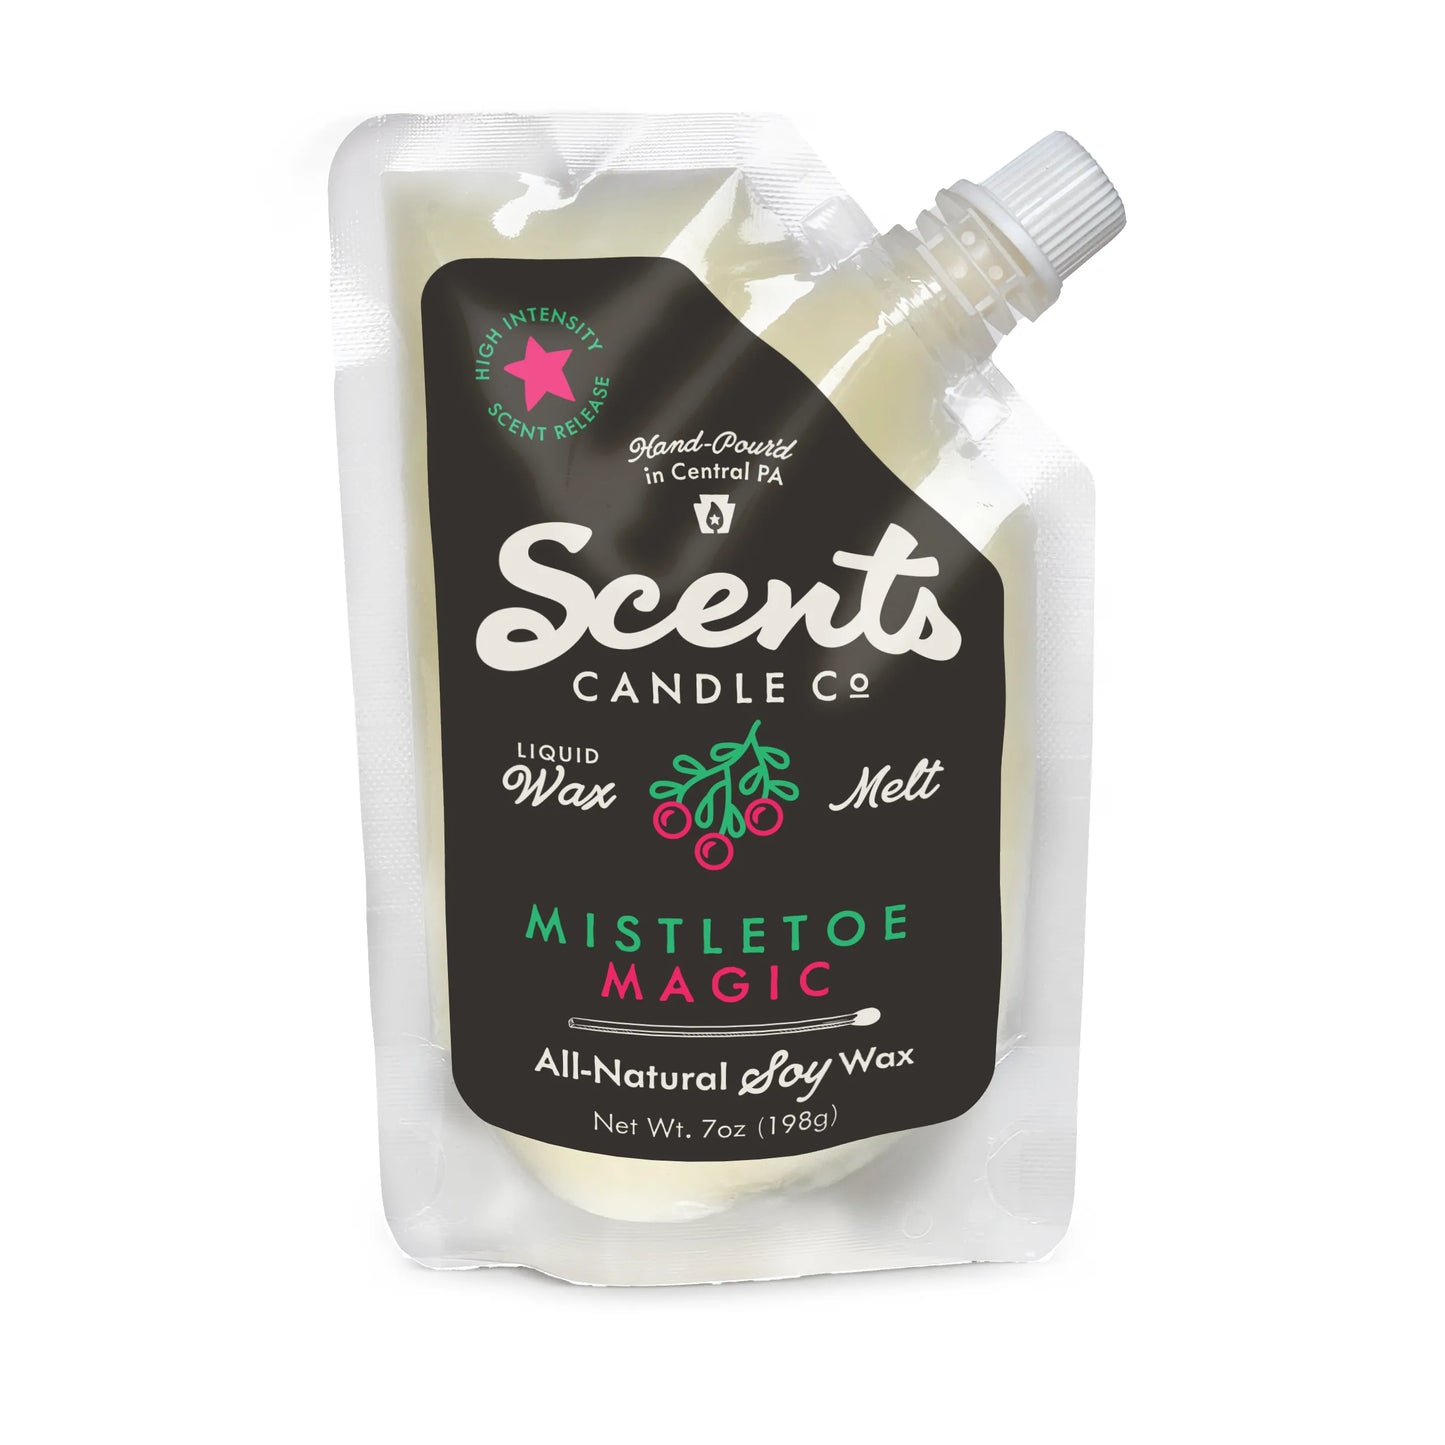 Scents Candle Co. Mistletoe Magic Liquid Wax Melt